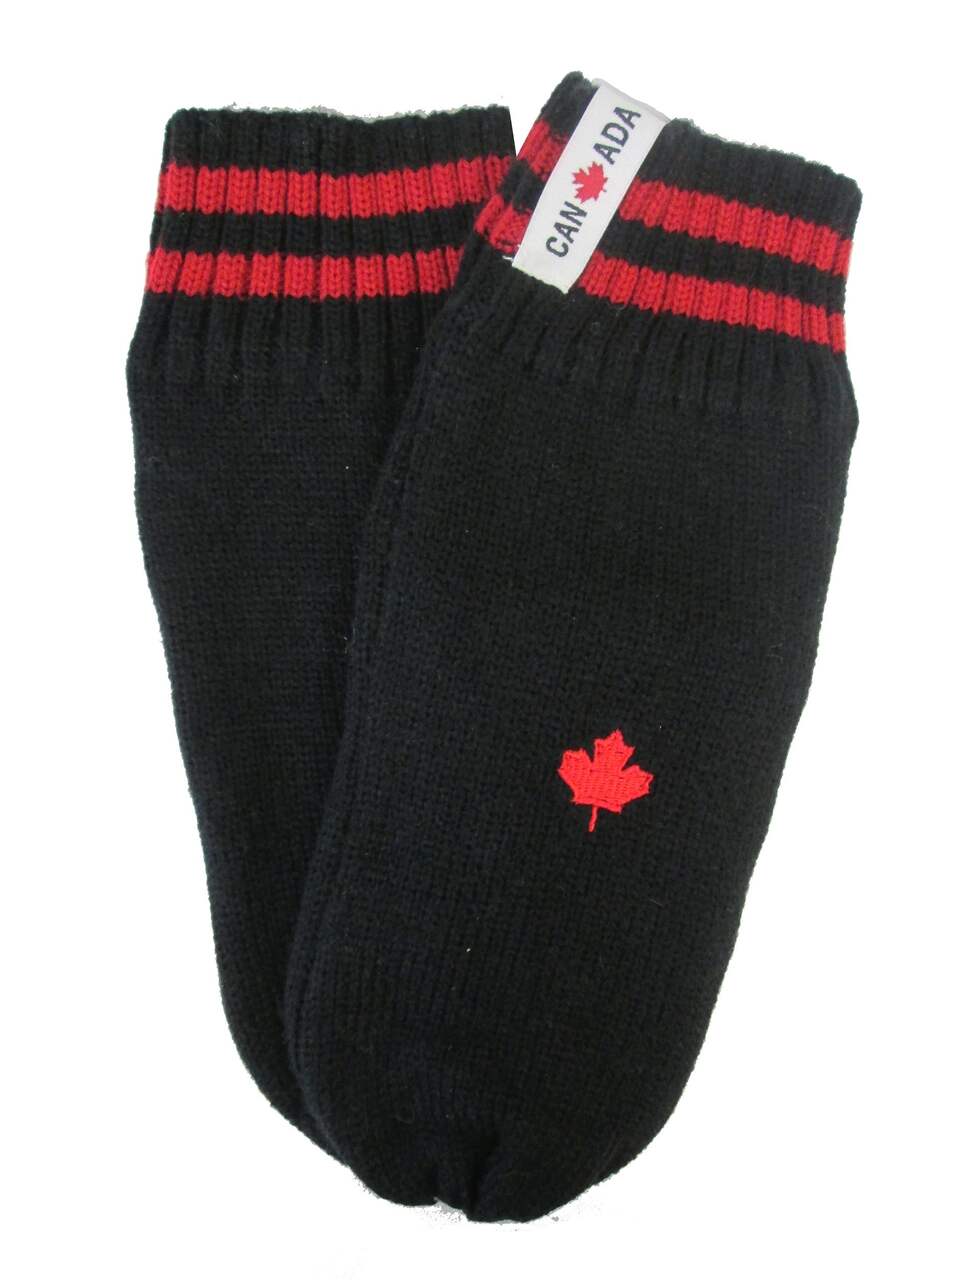 Hot Paws Men's Convertible Thermal Fleece Knit Flip Top Winter